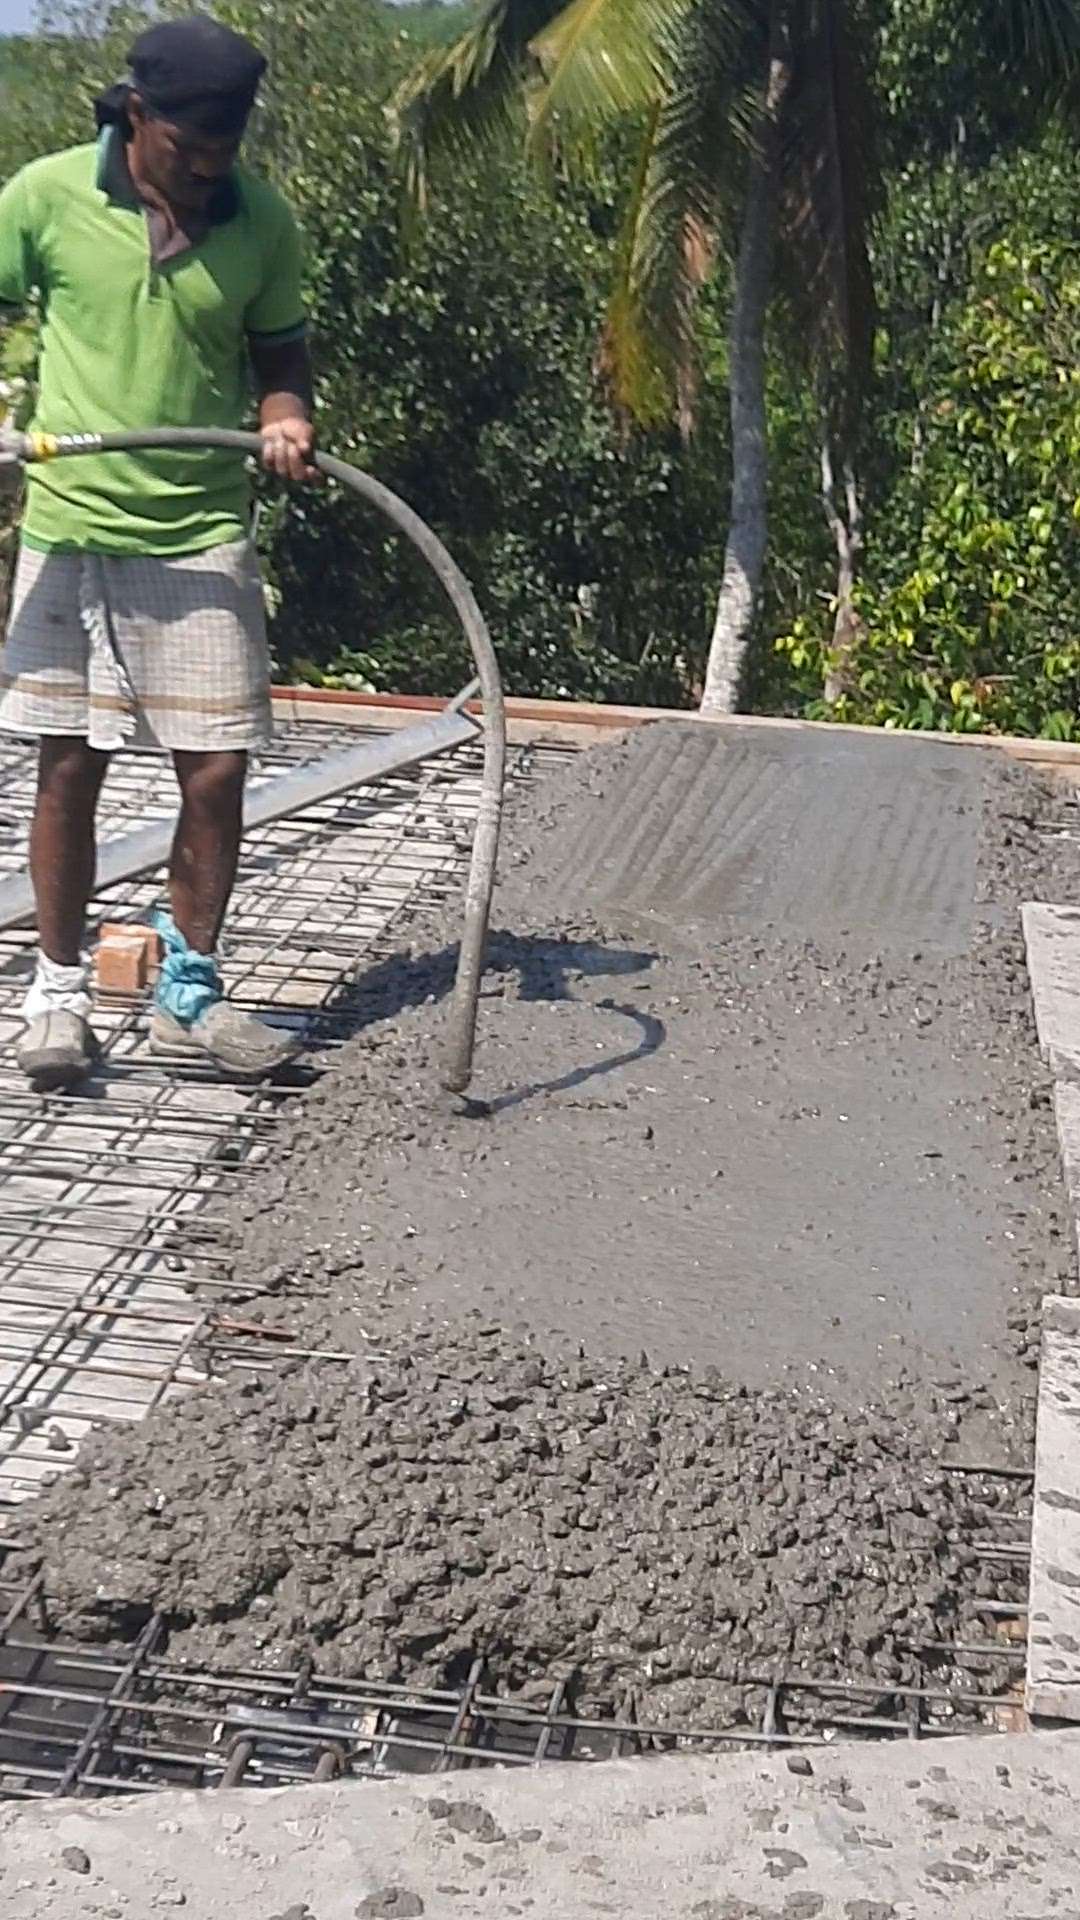 Vibrating the concrete